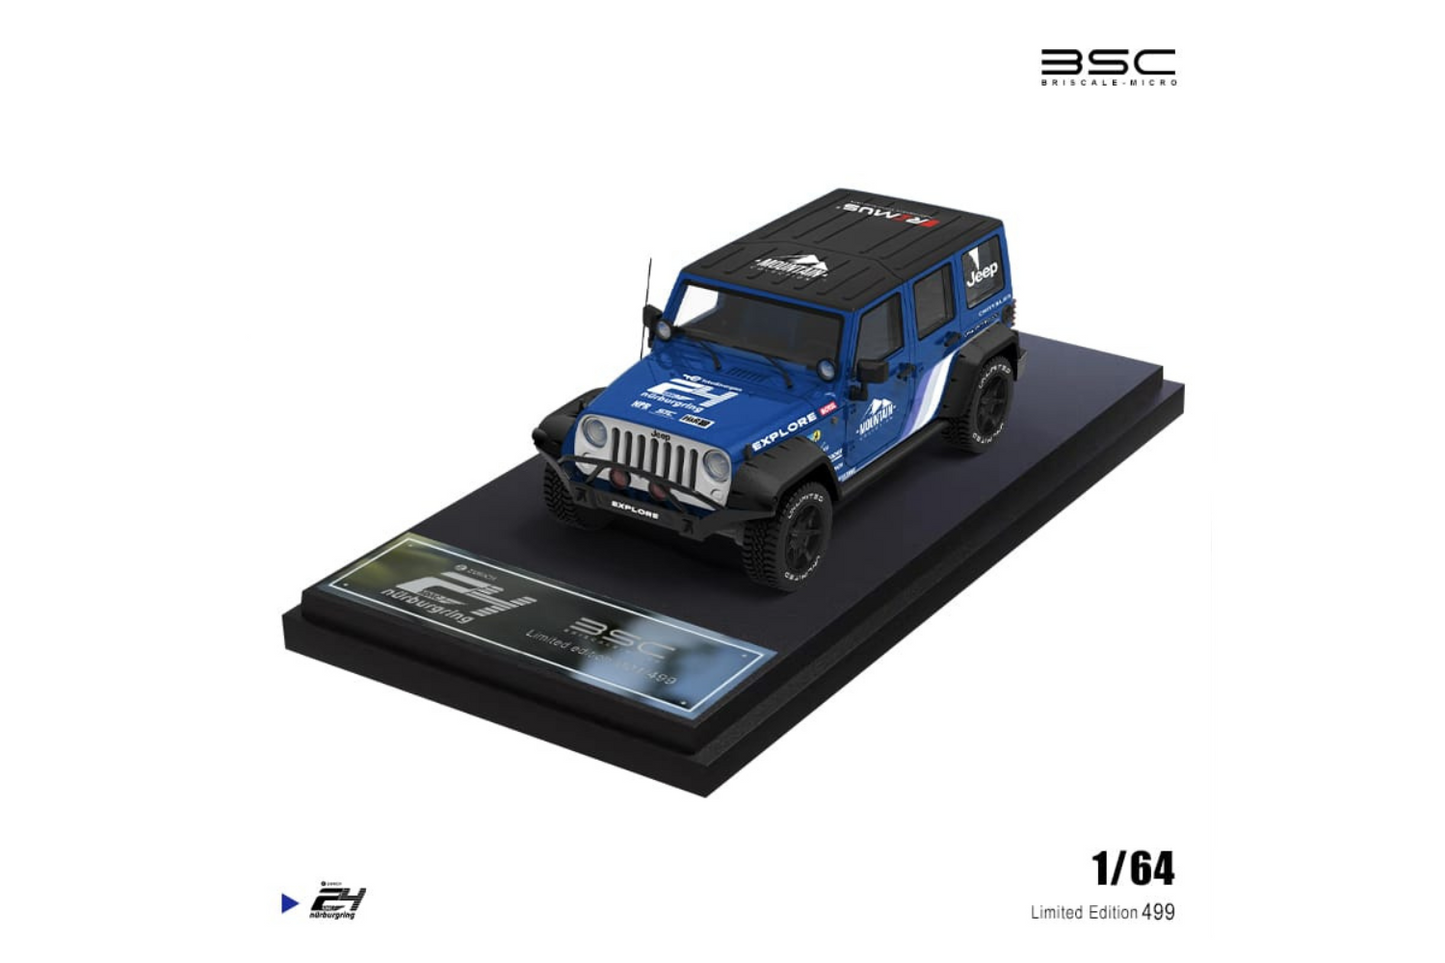 BSC 1/64 Subaru WRX STI - Jeep Wrangler - Trailer & Repairmen Set in Subaru Event Livery